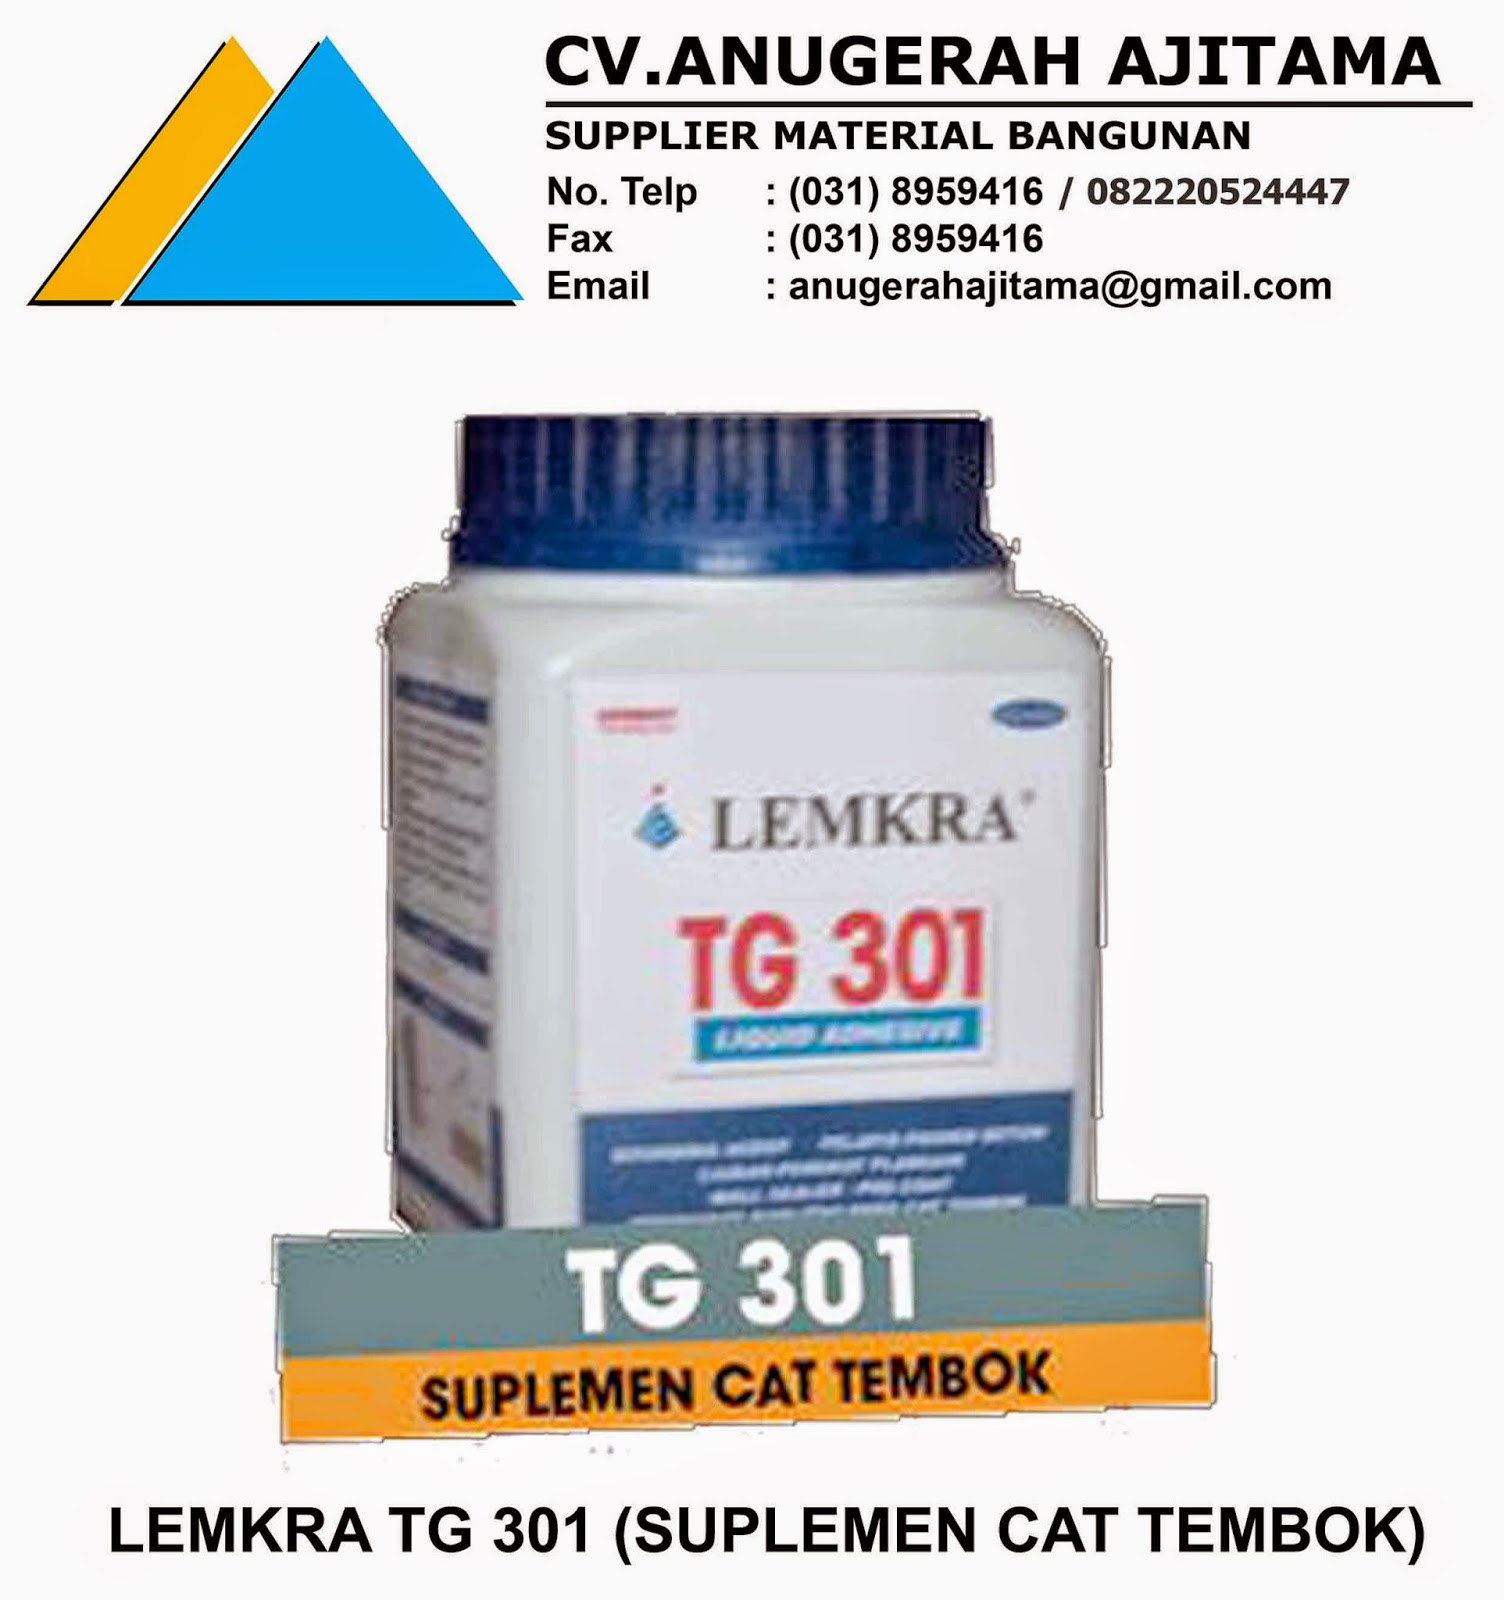 LEMKRA TG 301 (SUPLEMEN CAT TEMBOK)